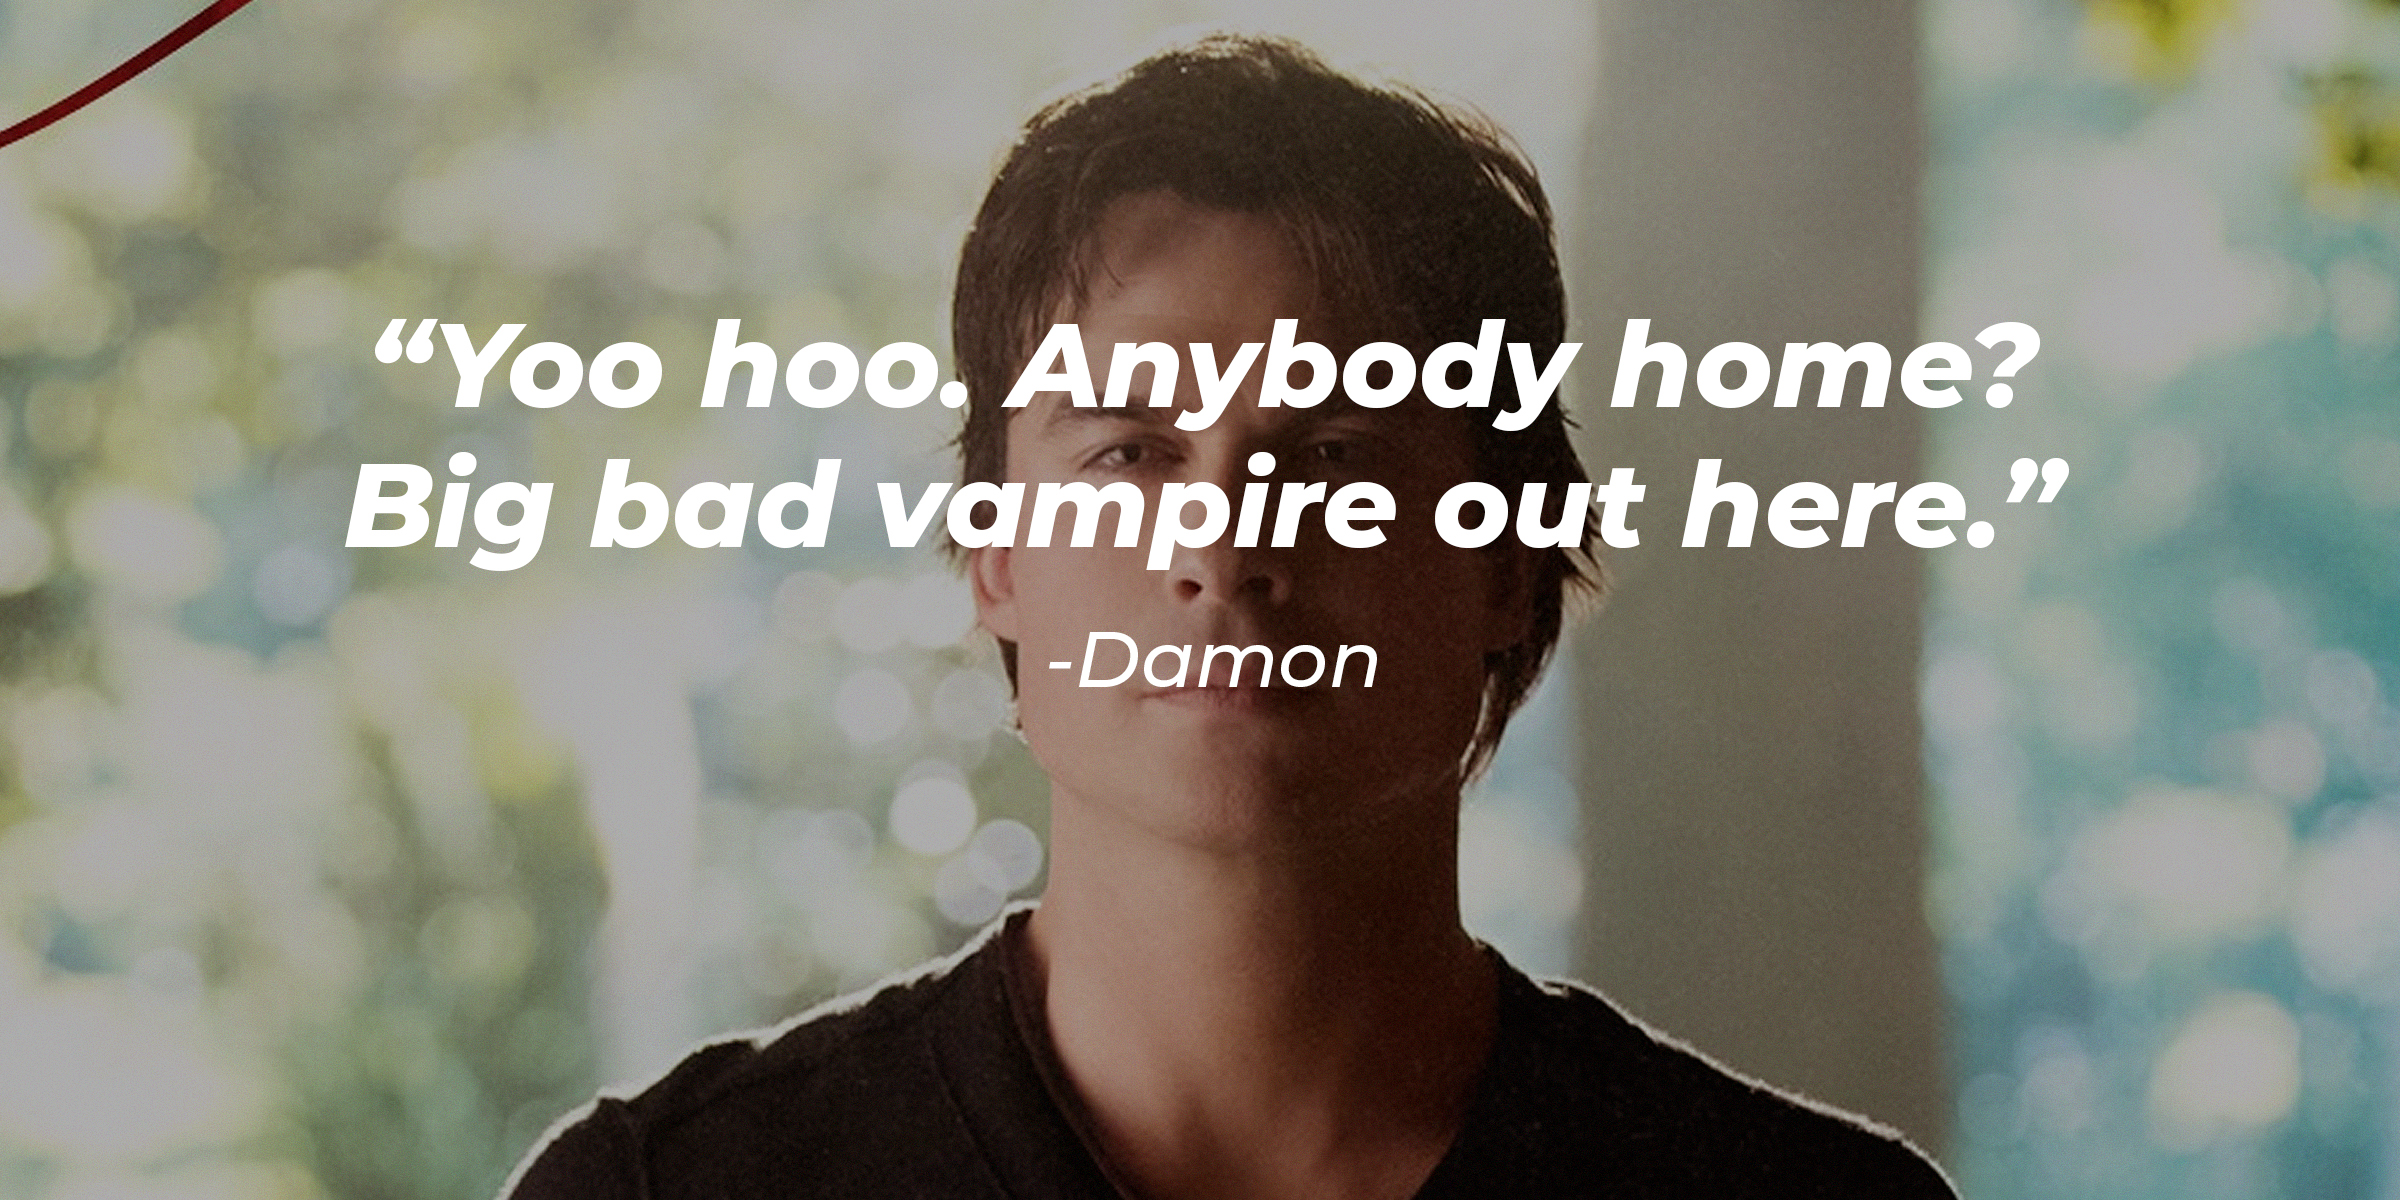 Damon's quote: "Yoo hoo. Anybody home? Big bad vampire out here." | Source: facebook.com/thevampirediaries